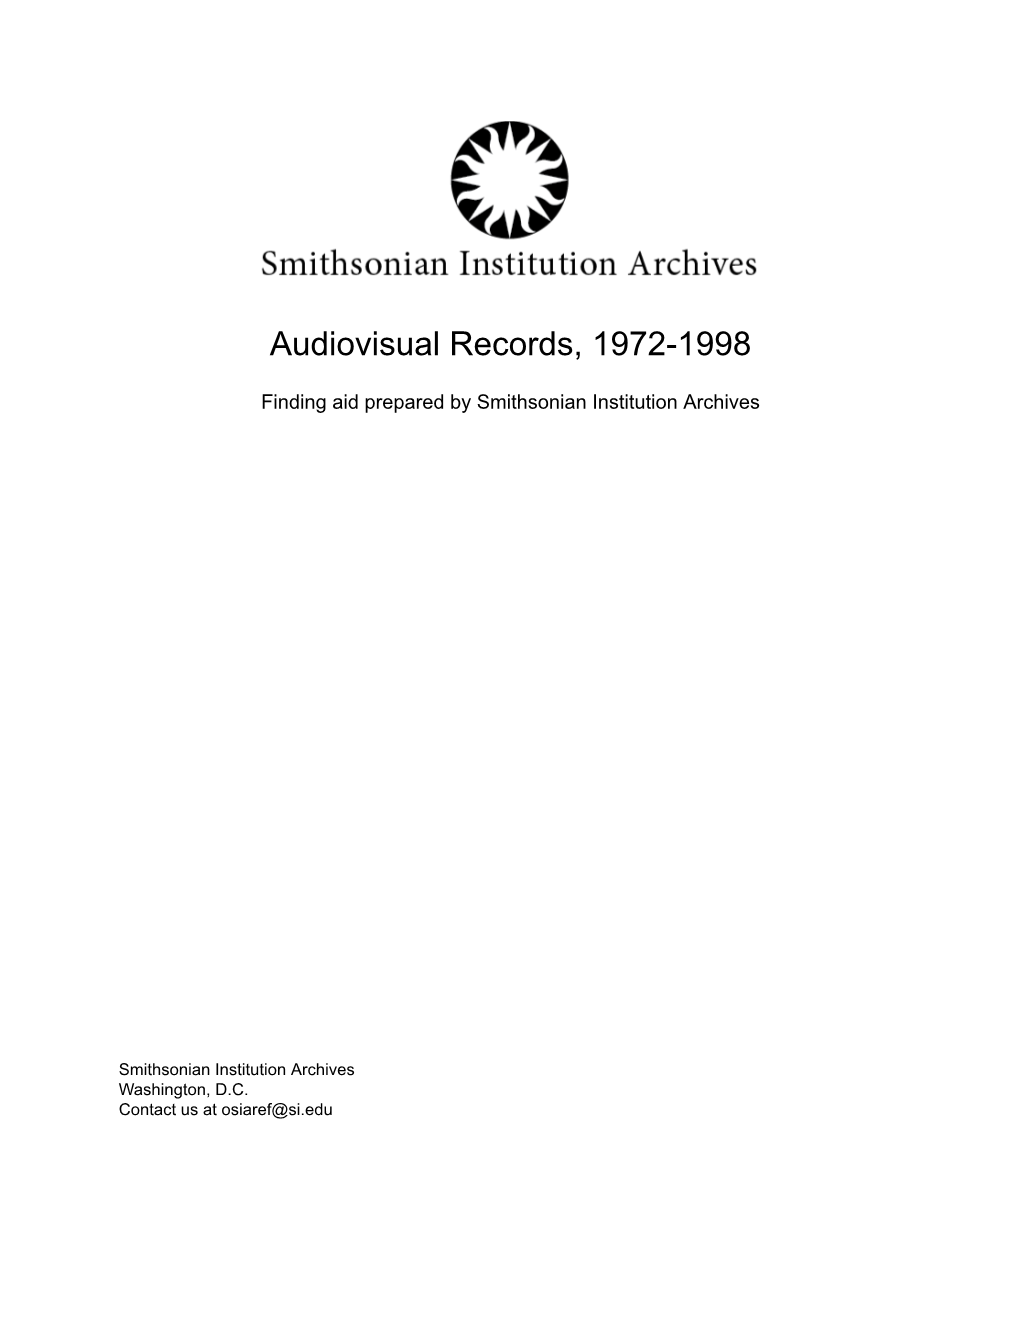 Audiovisual Records, 1972-1998